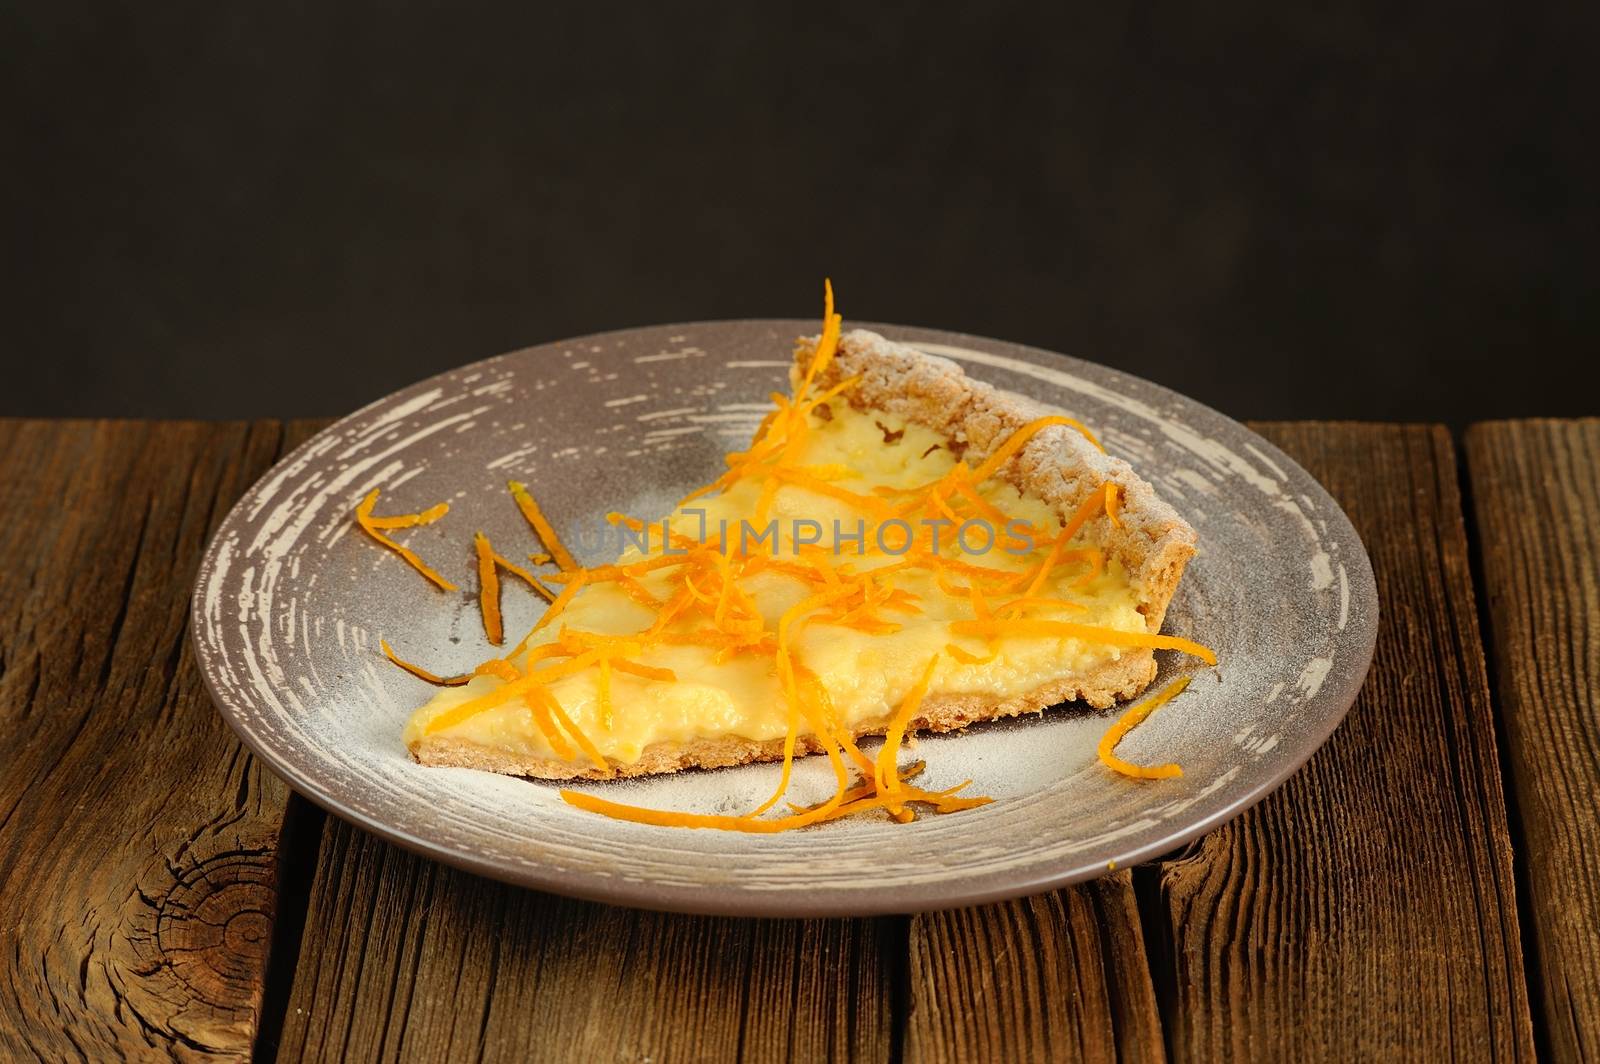 Piece on lemon tart with orange peel on wooden background